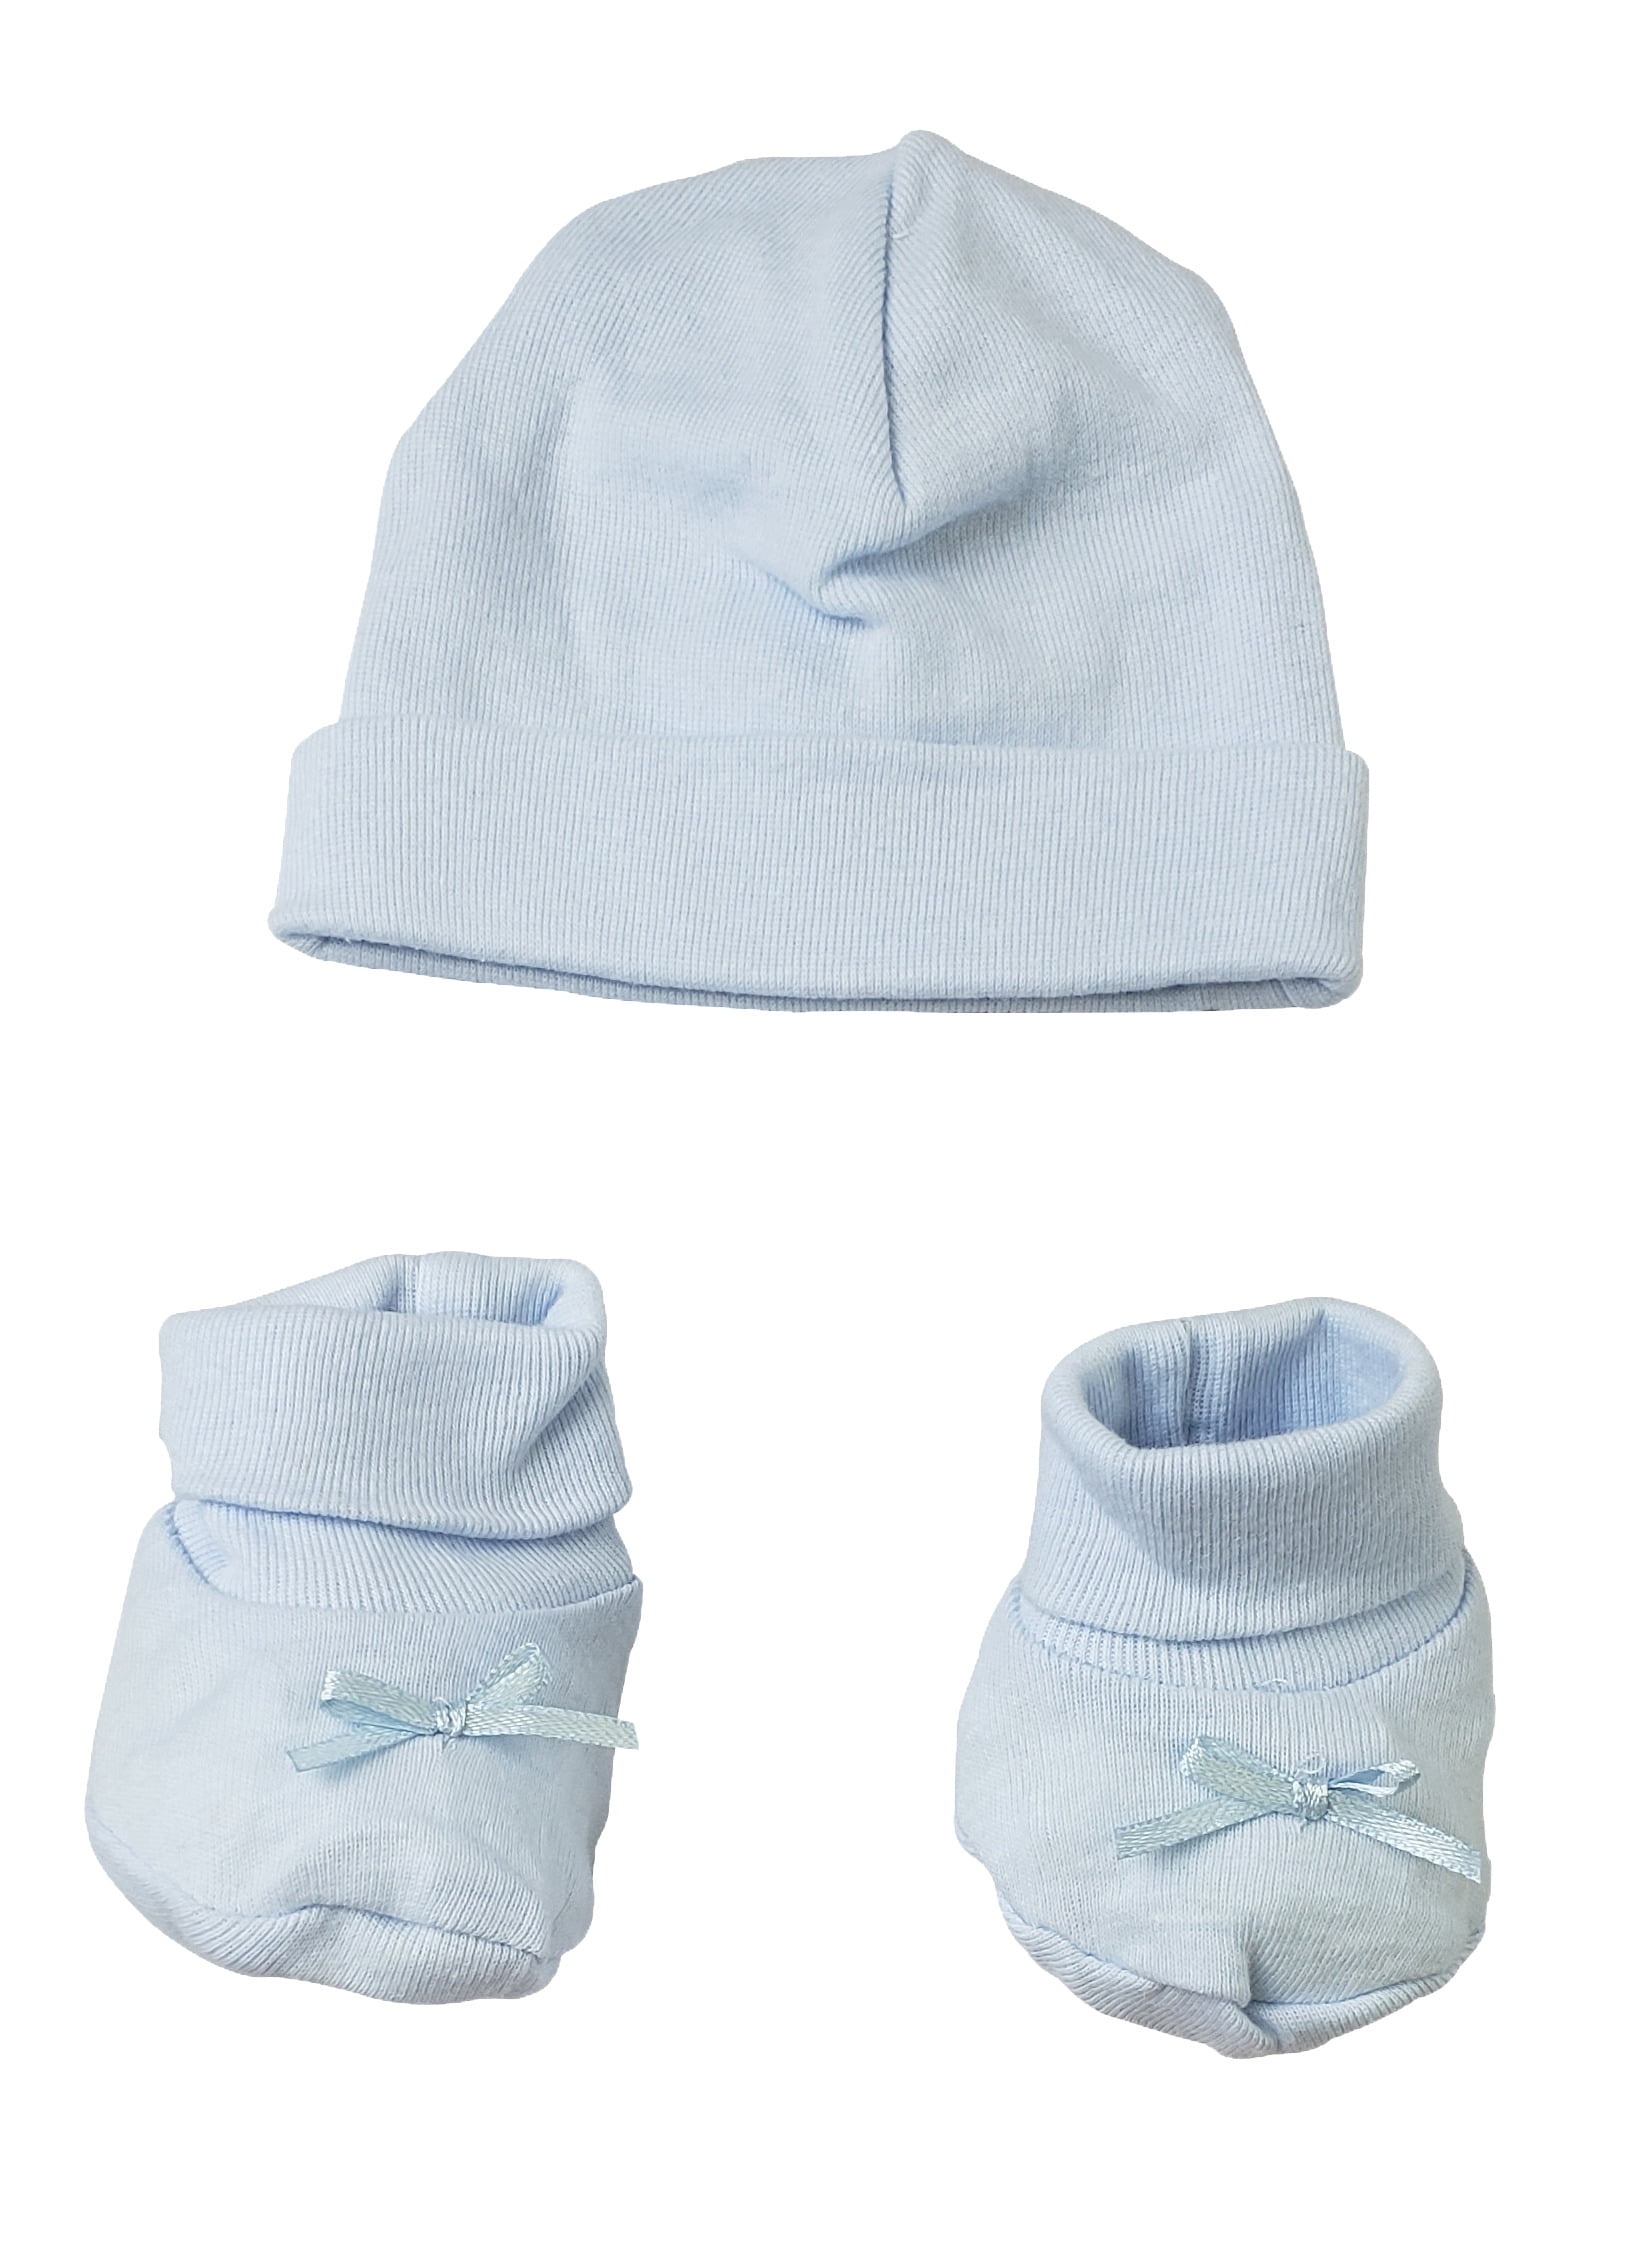 New Newborn Infant/Child Winter Hat Cap Beanie 100% Cotton with Cartoon Print 